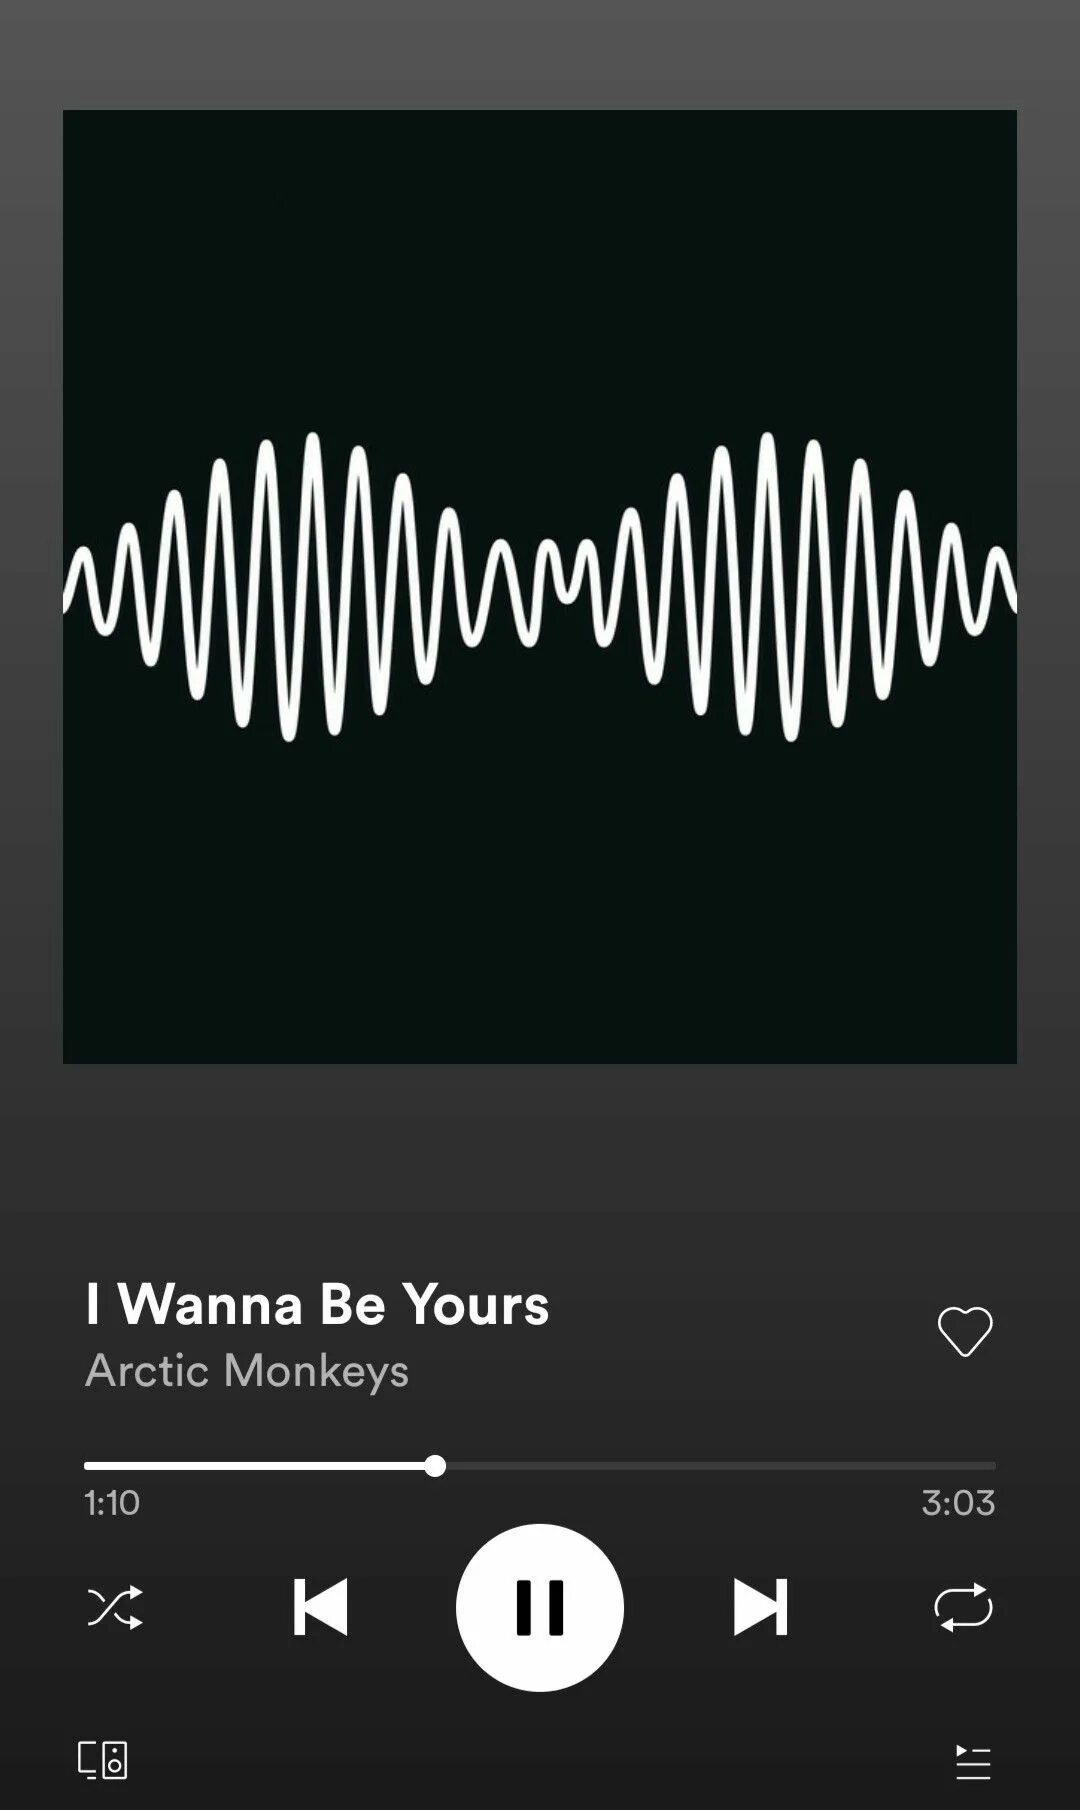 I wanna be yours перевод. Arctic Monkeys i wanna be yours. Мой плейлист картинка. Картинки на плейлист. R U mine i wanna be yours.